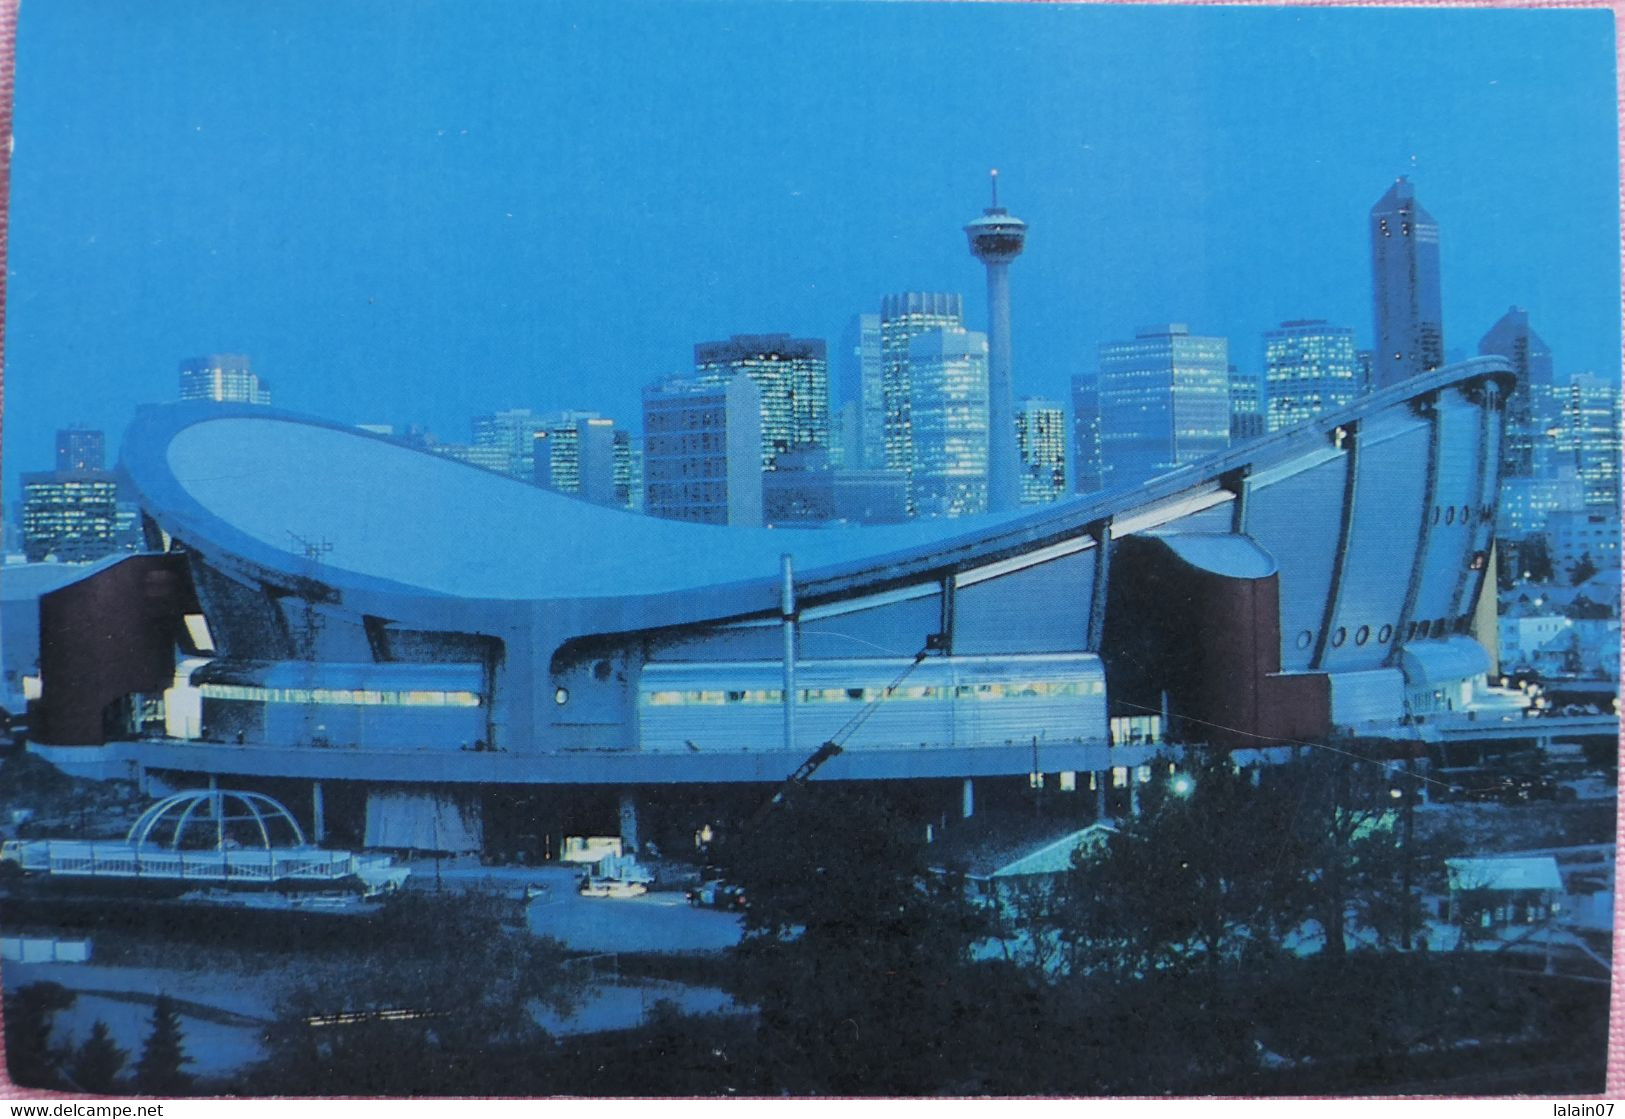 Carte Postale : Canada : Alberta : CALGARY : Olympic Saddledome, Stampede Park - Calgary